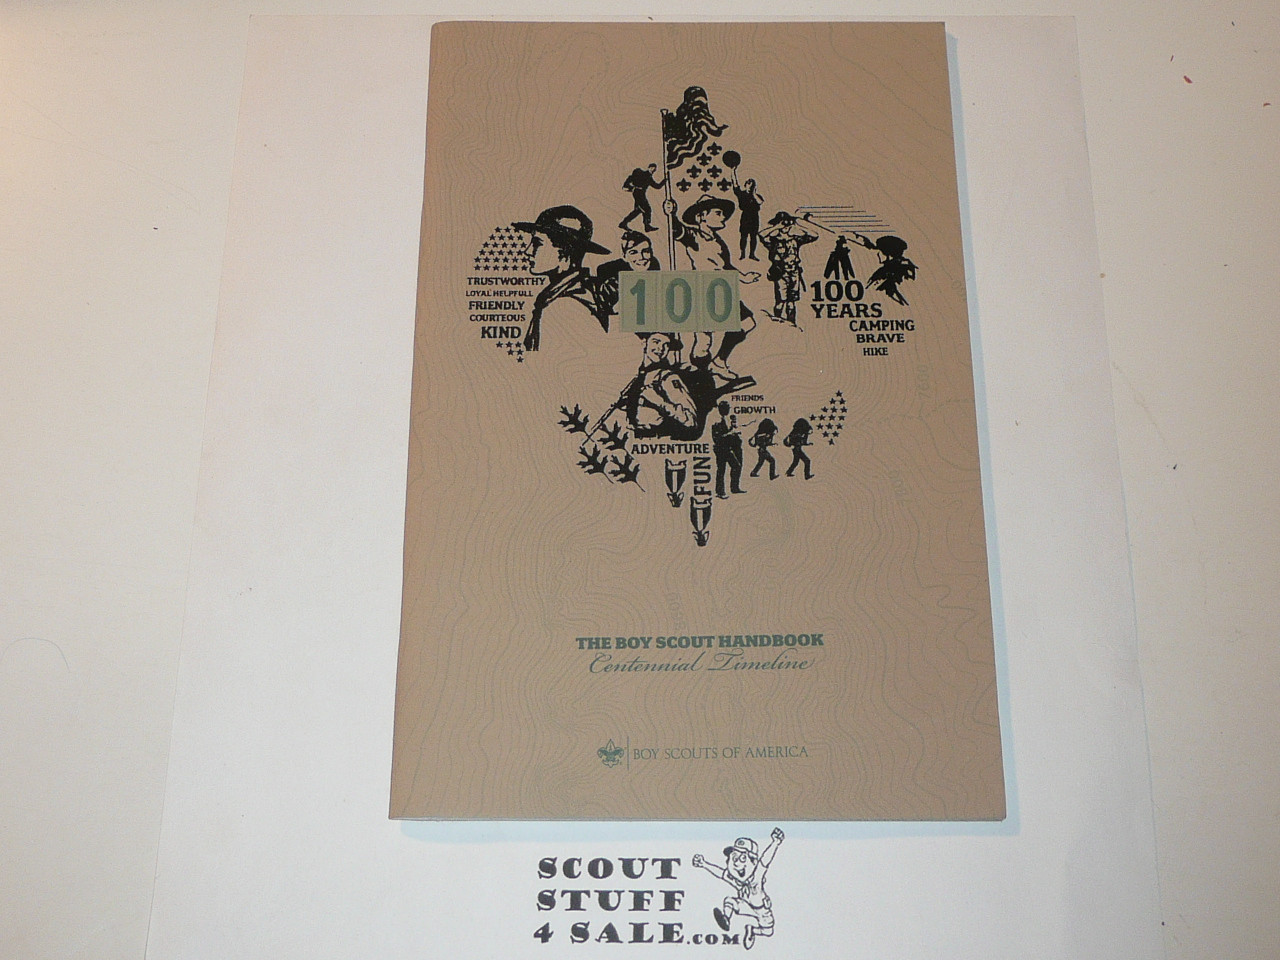 2010 Boy Scout Handbook Centennial Timeline Supplement, 100th Anniversary